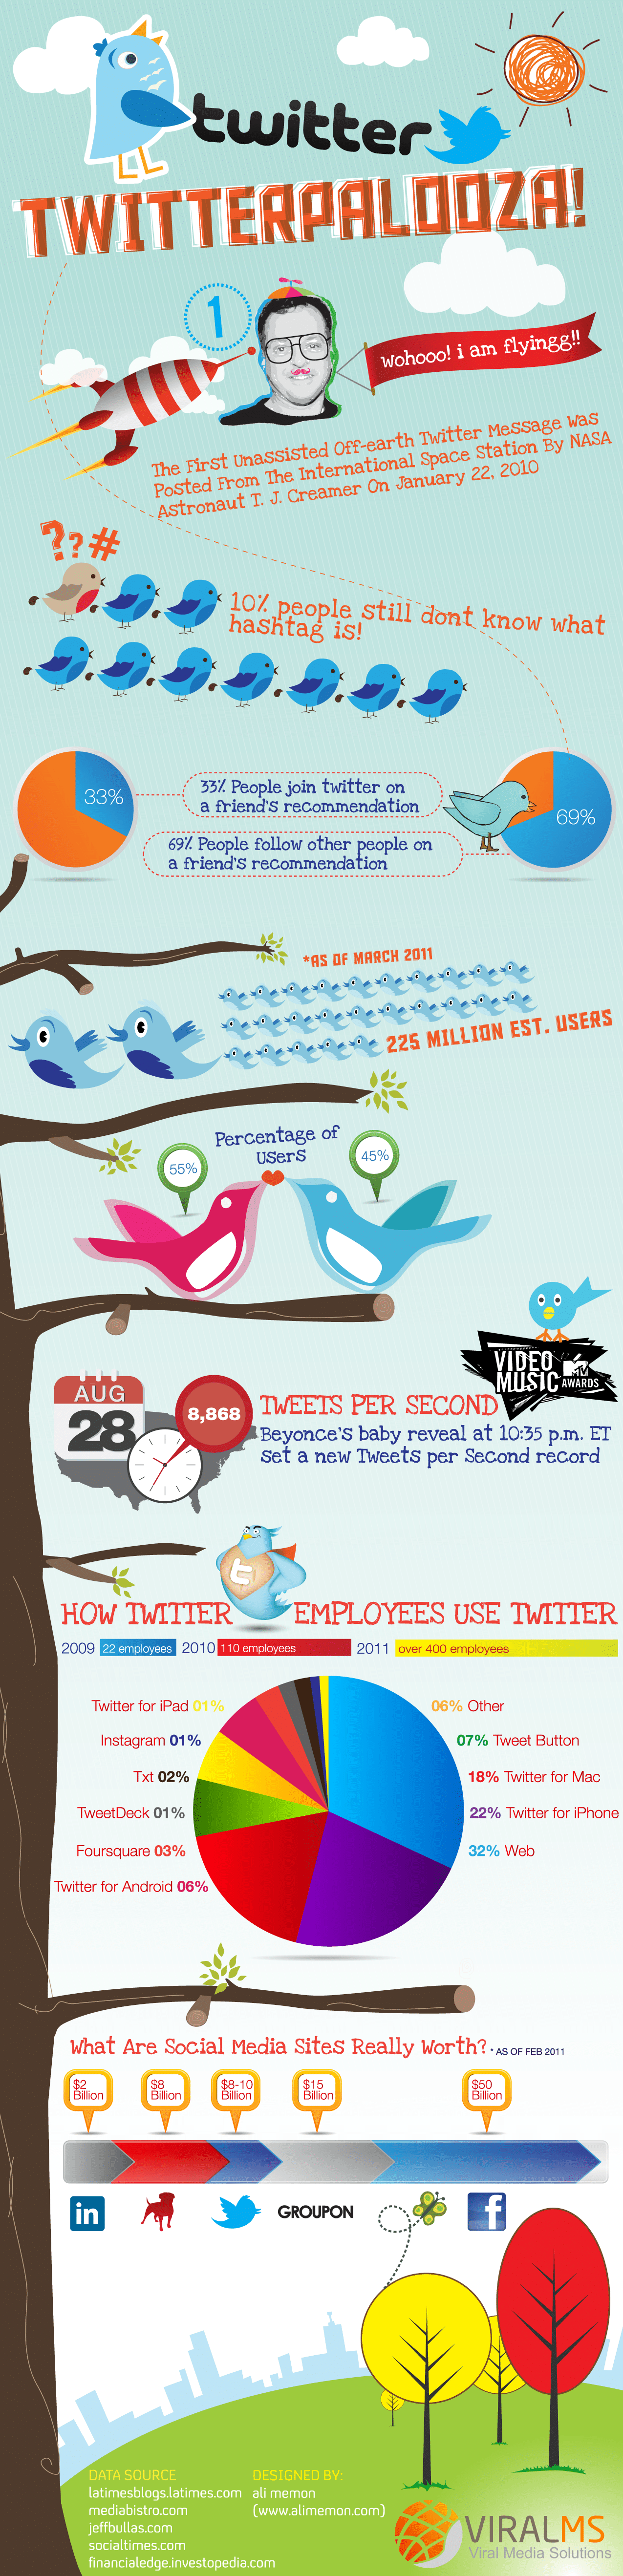 Twitter Statistics Infographic As Twitterpalooza